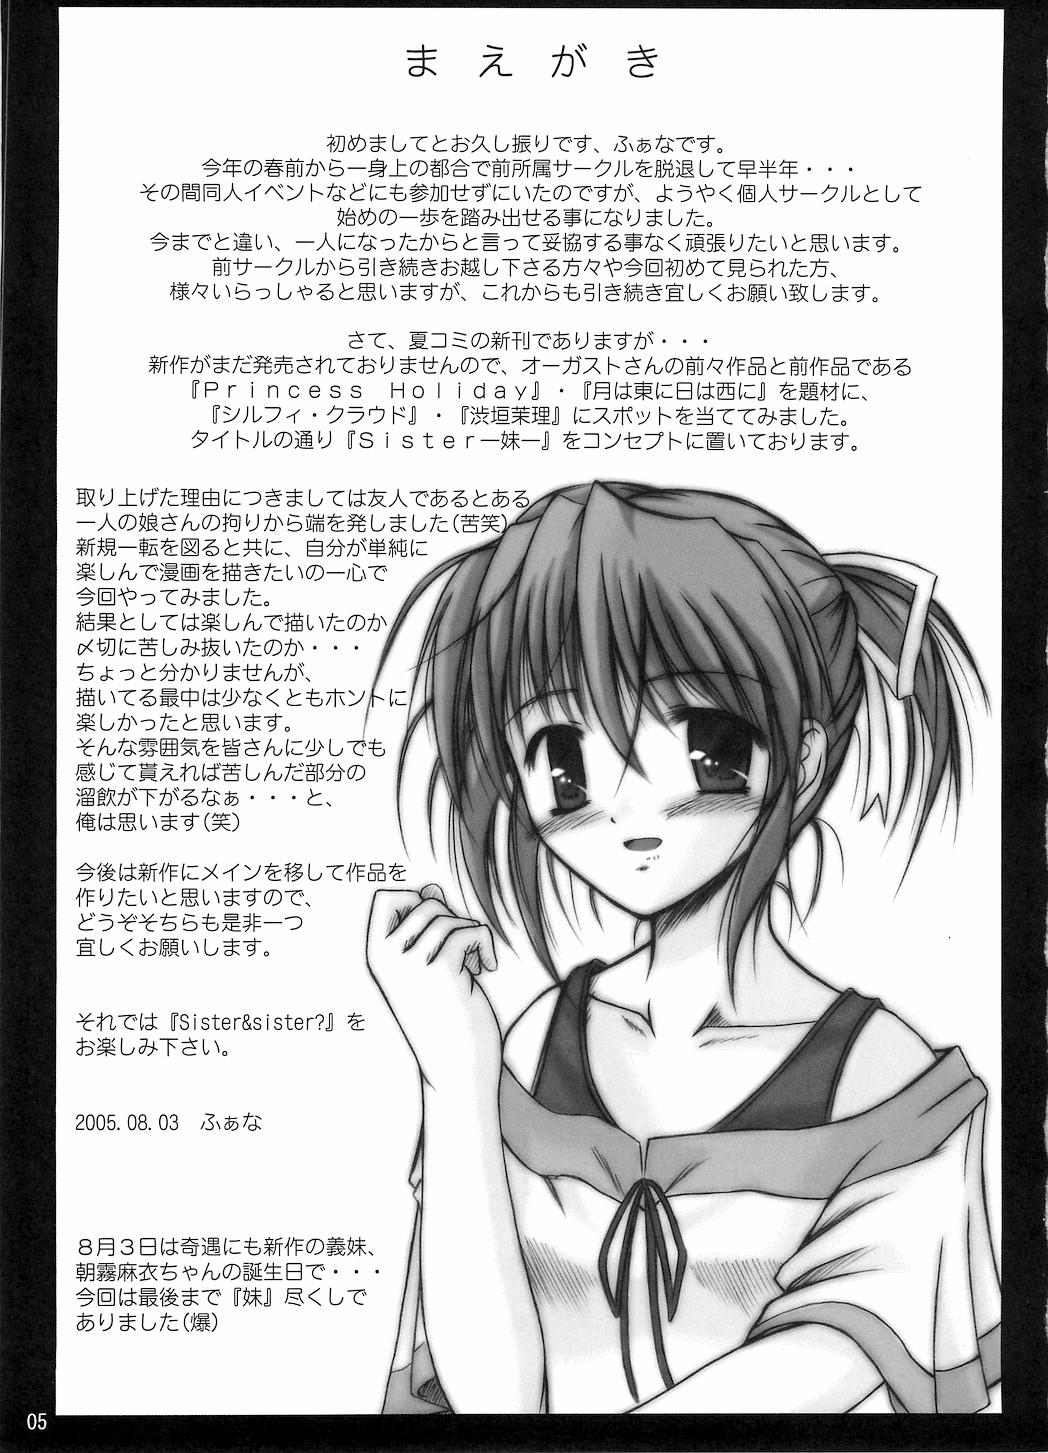 Bj Sister & sister? - Tsuki wa higashi ni hi wa nishi ni Princess holiday Romantic - Page 3